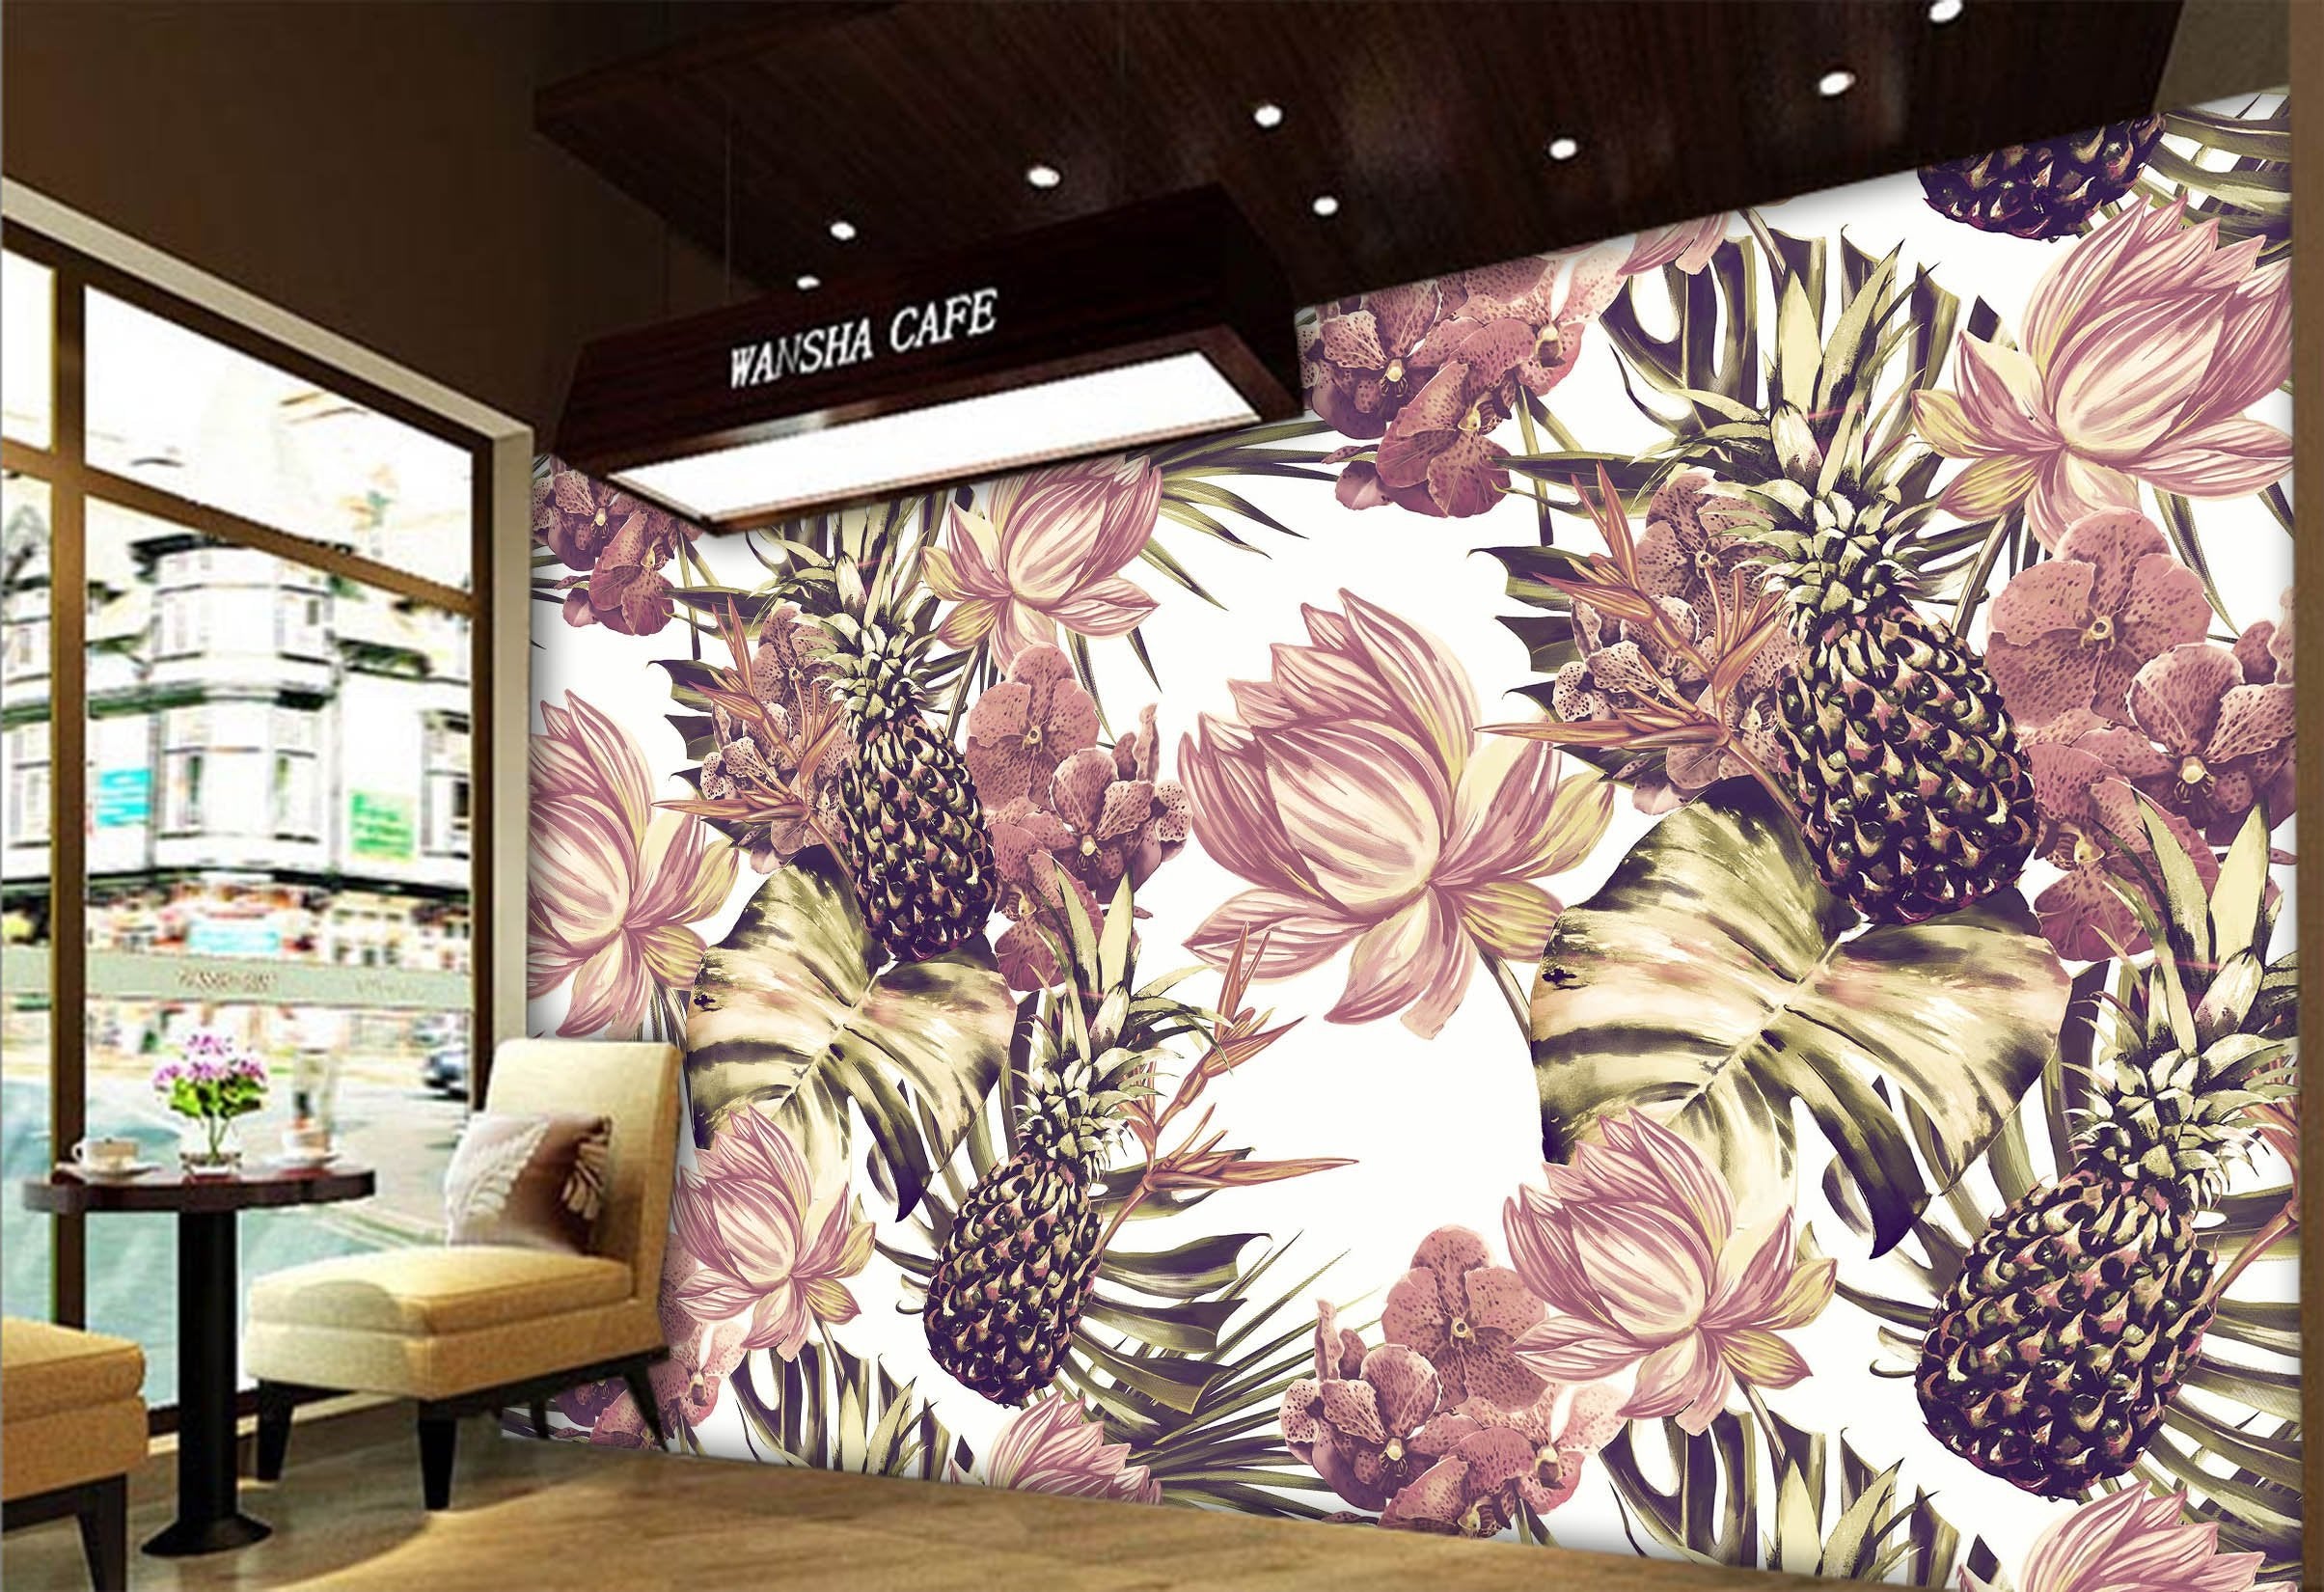 3D Flowers And Pineapple Pattern 641 Wallpaper AJ Wallpaper 